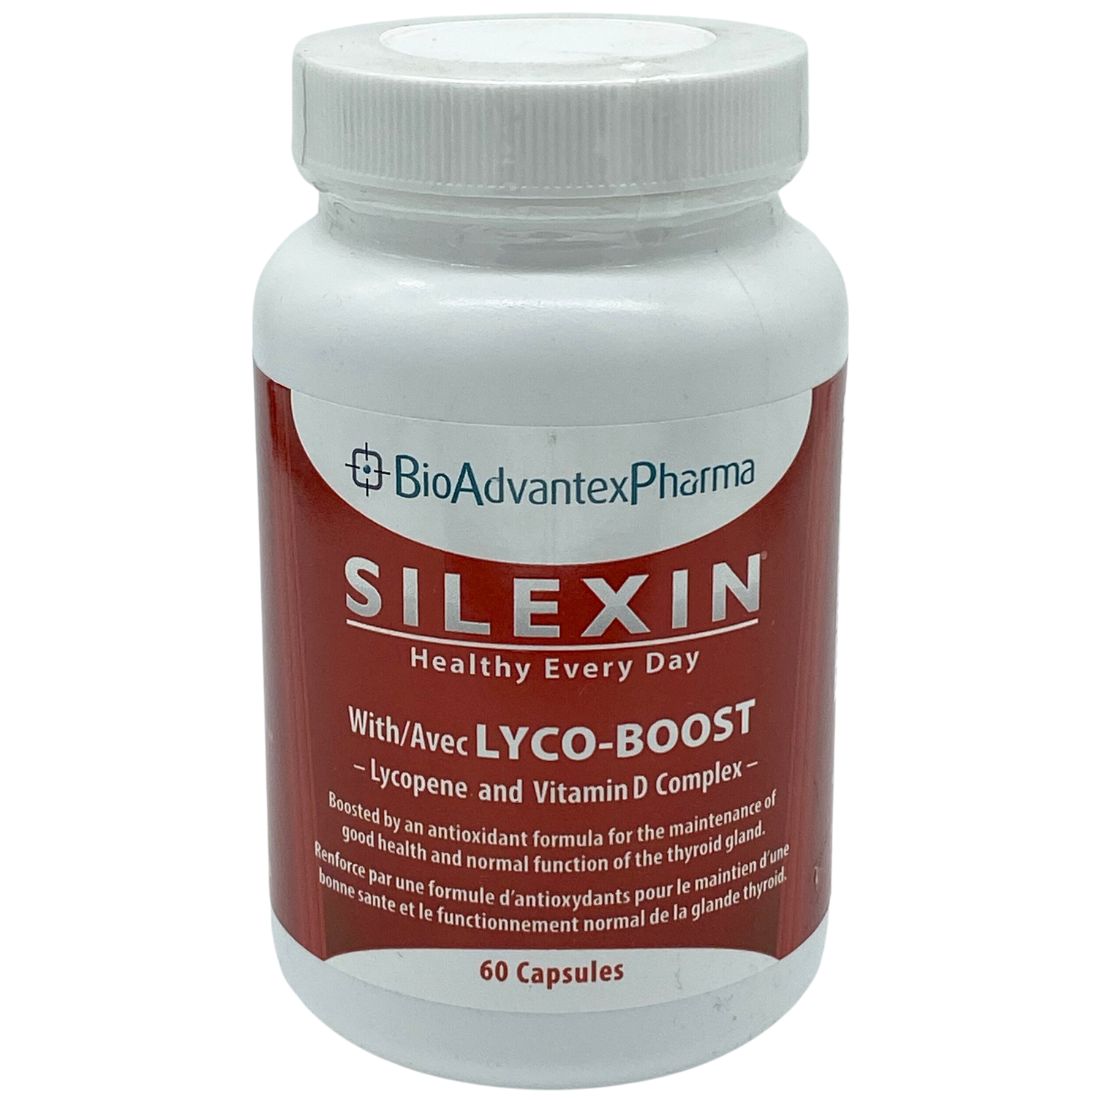 BioAdvantex Pharma Silexin with Lyco-Boost (Formerly ProVantex Silexin), 60 Capsules